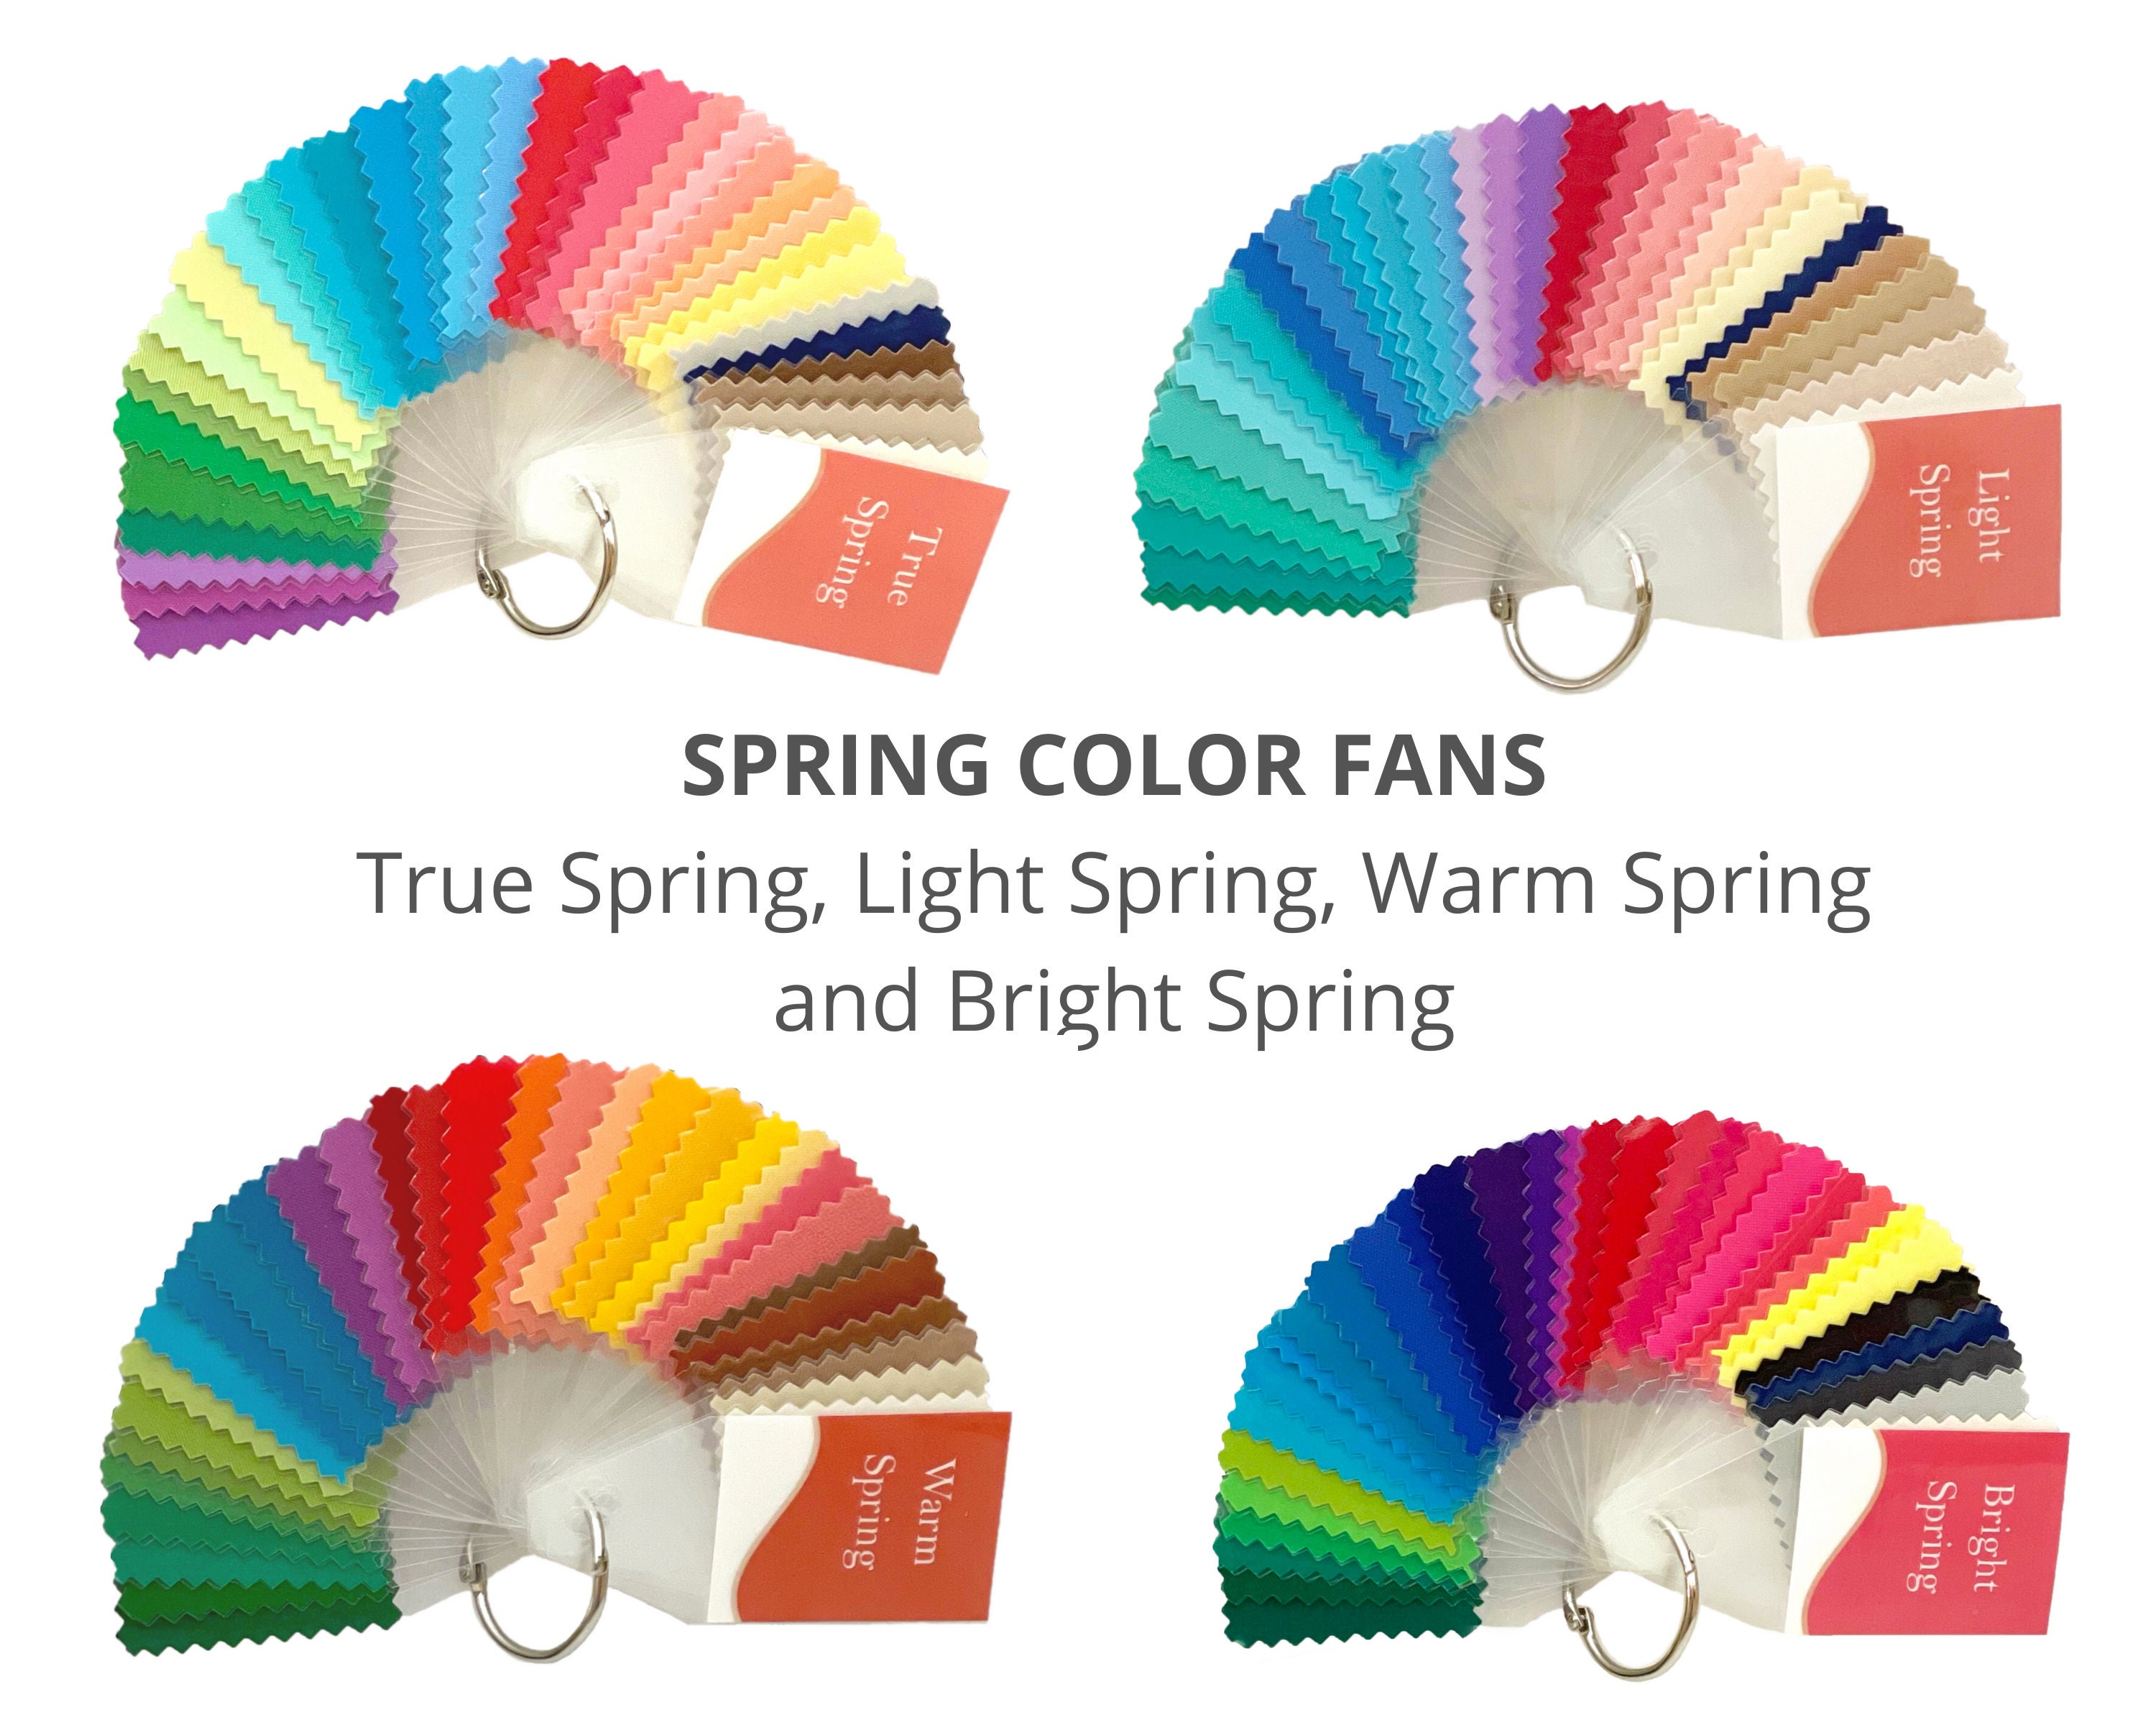 The Light Spring Make-up Palette, the concept wardrobe